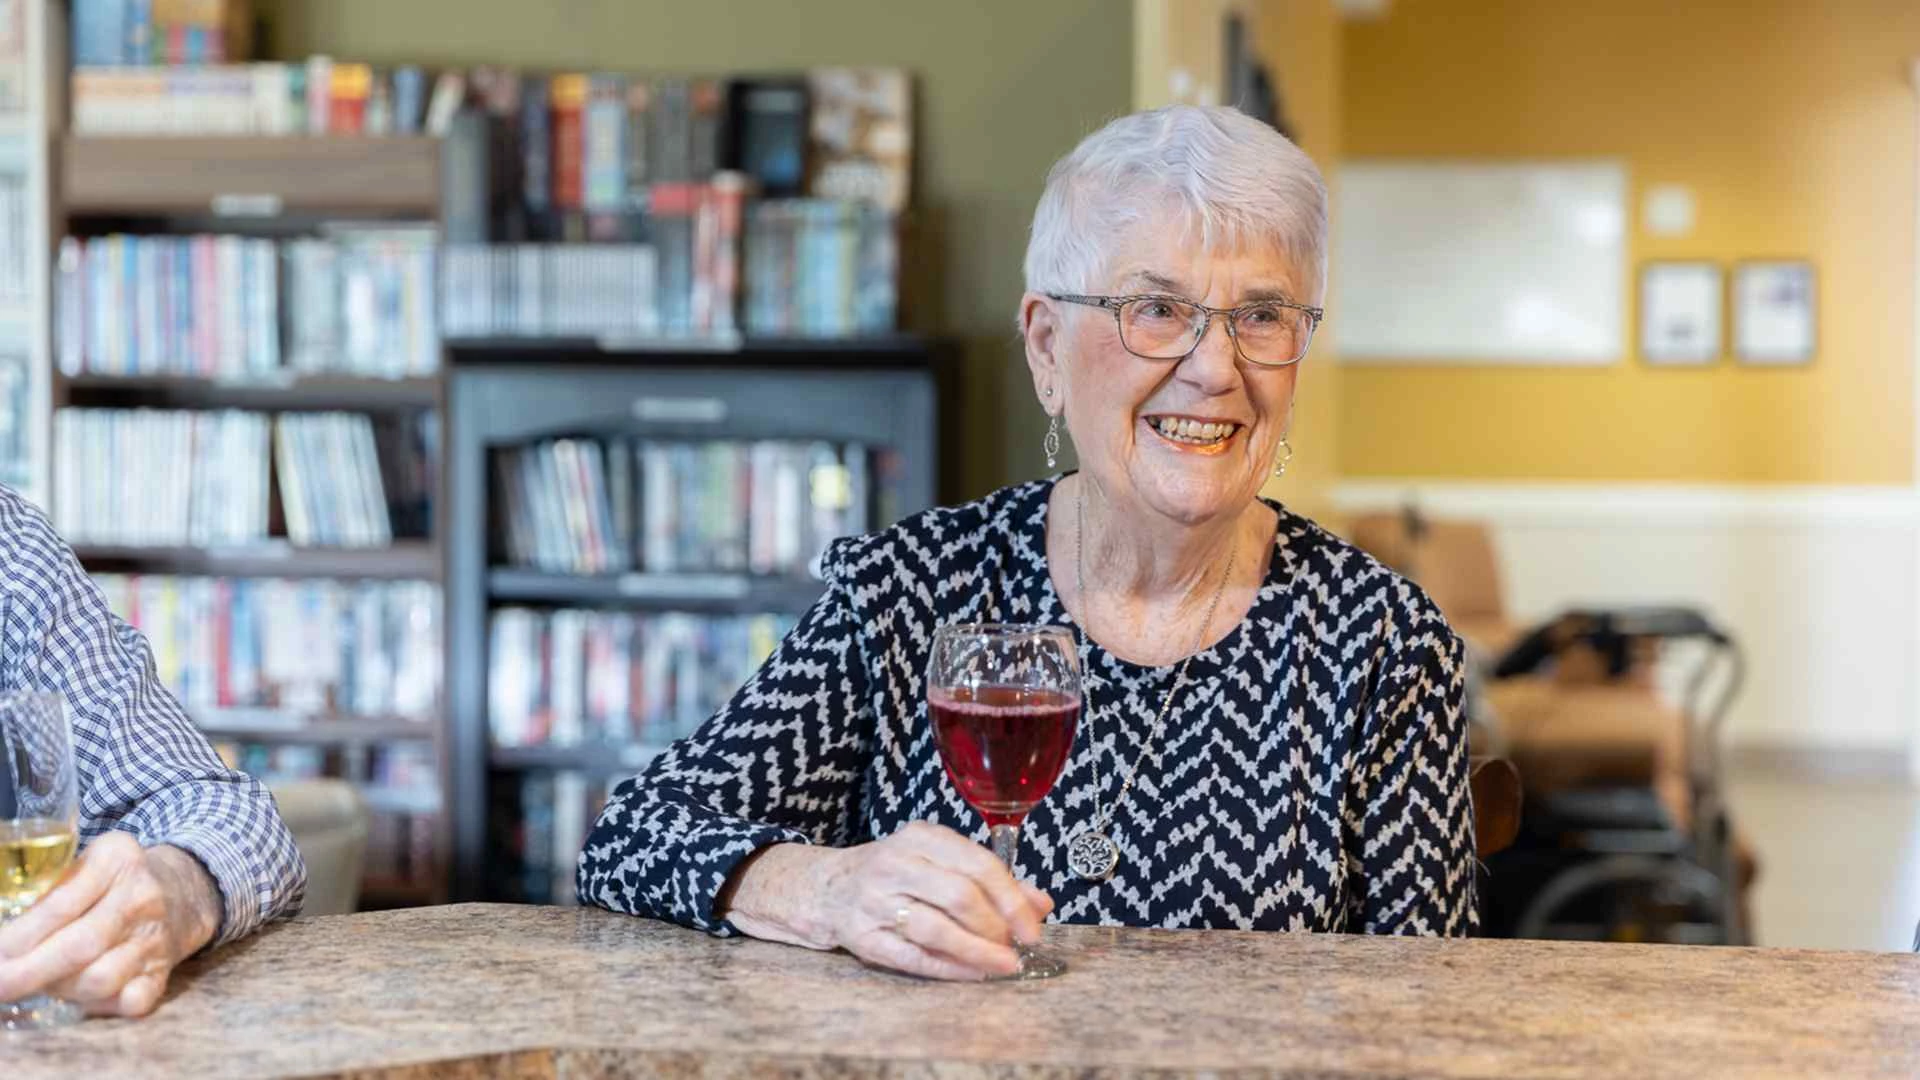 An elderly lady smiling while enjoying coffee